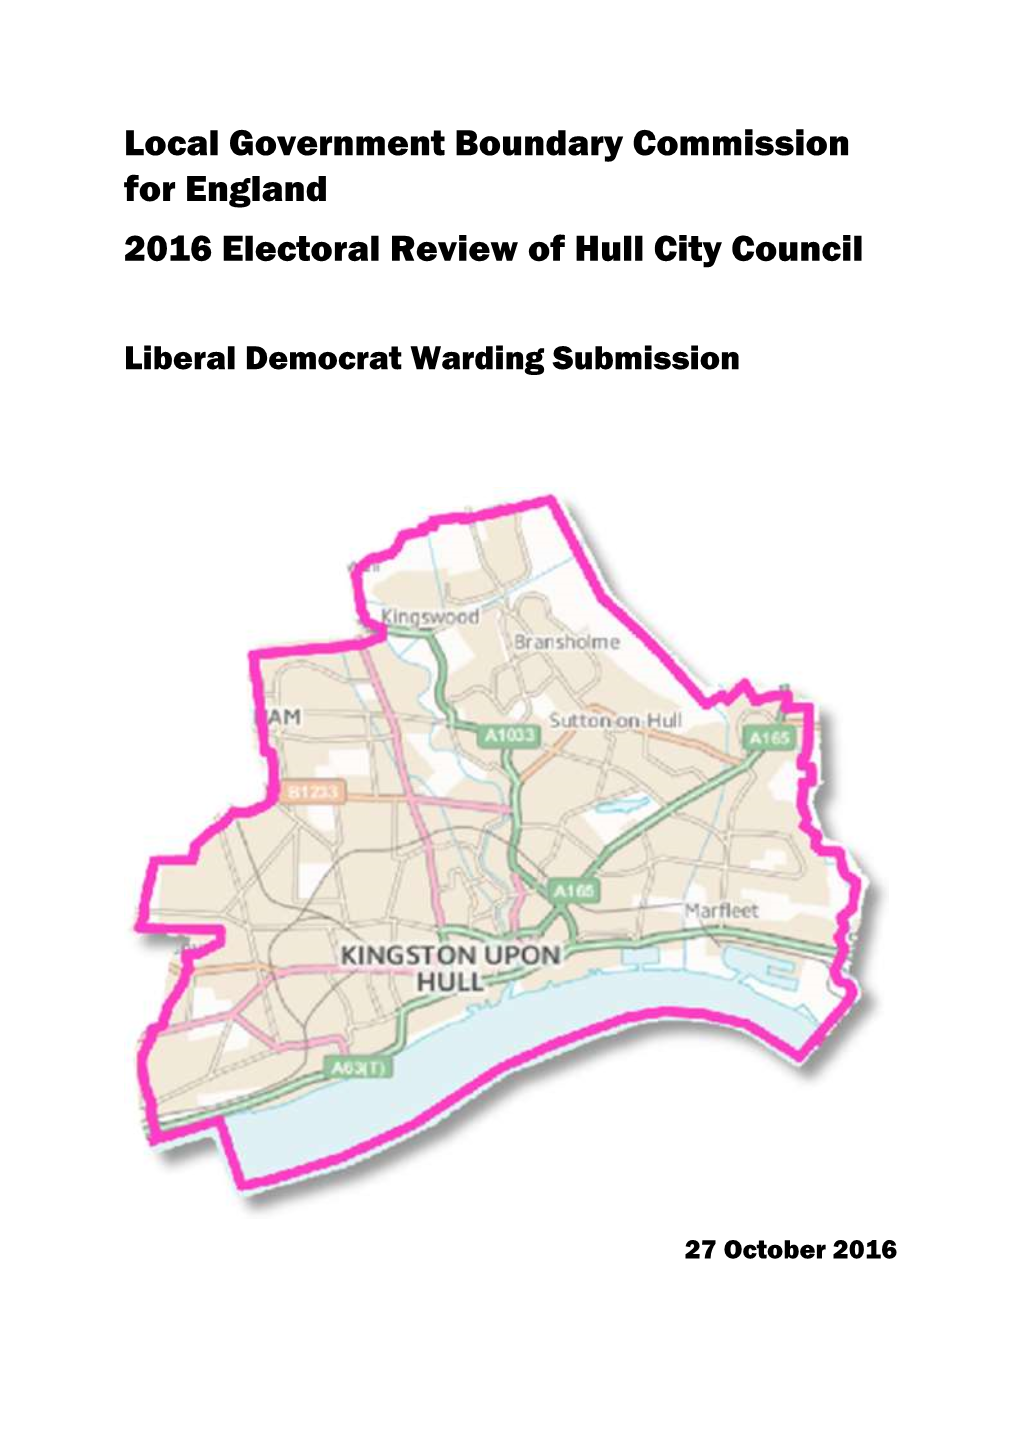 Hull, the Liberal Democrat